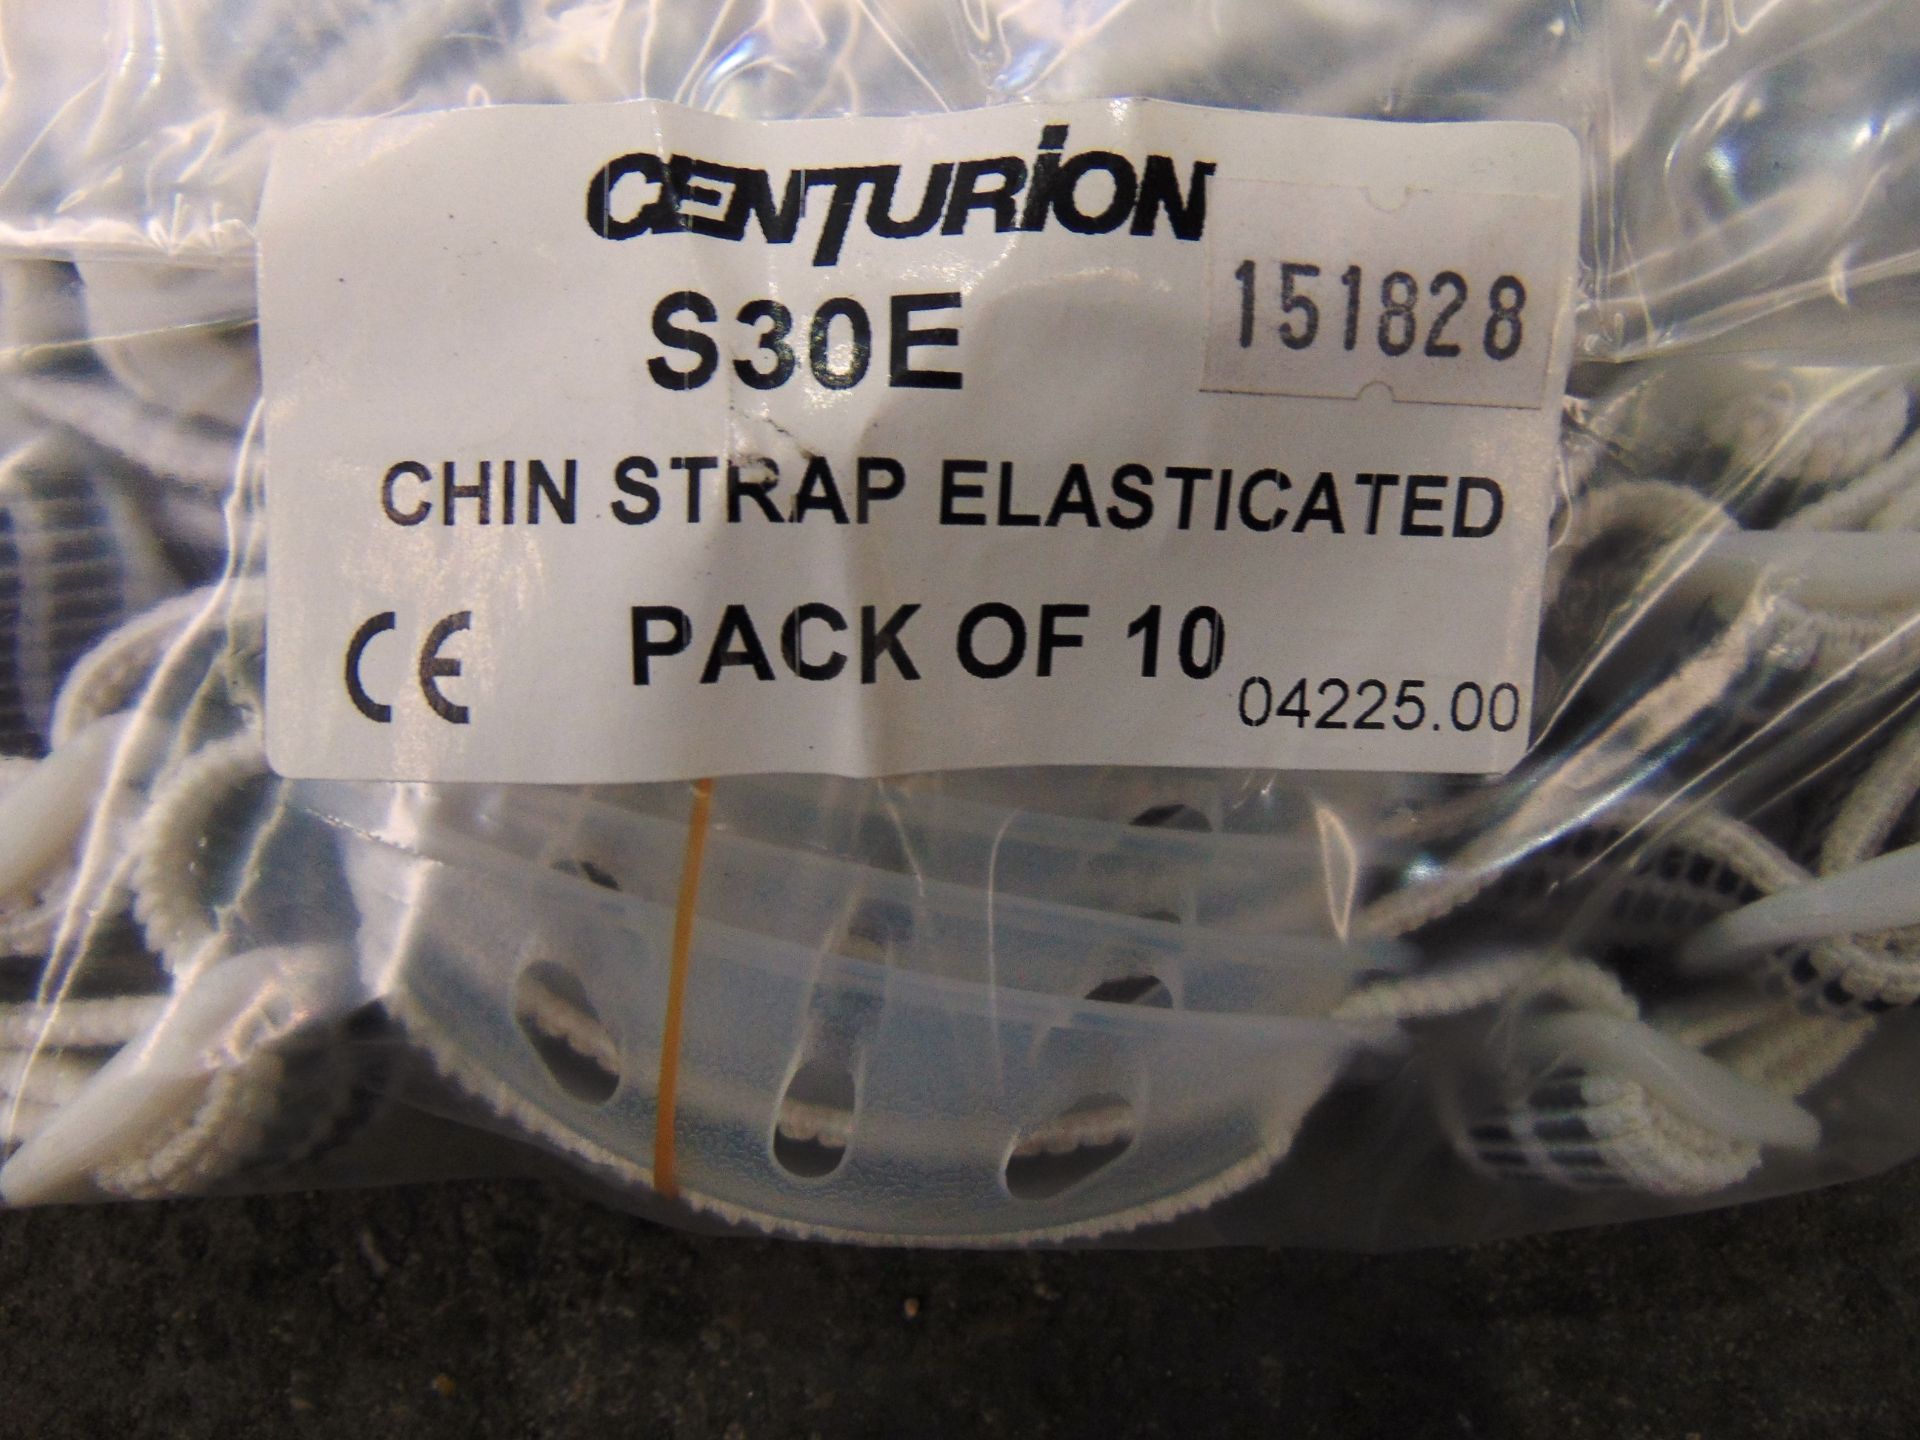 100 x Unissued Centurion Adjustable Elasticated Chin Straps (S30E) - Image 3 of 3